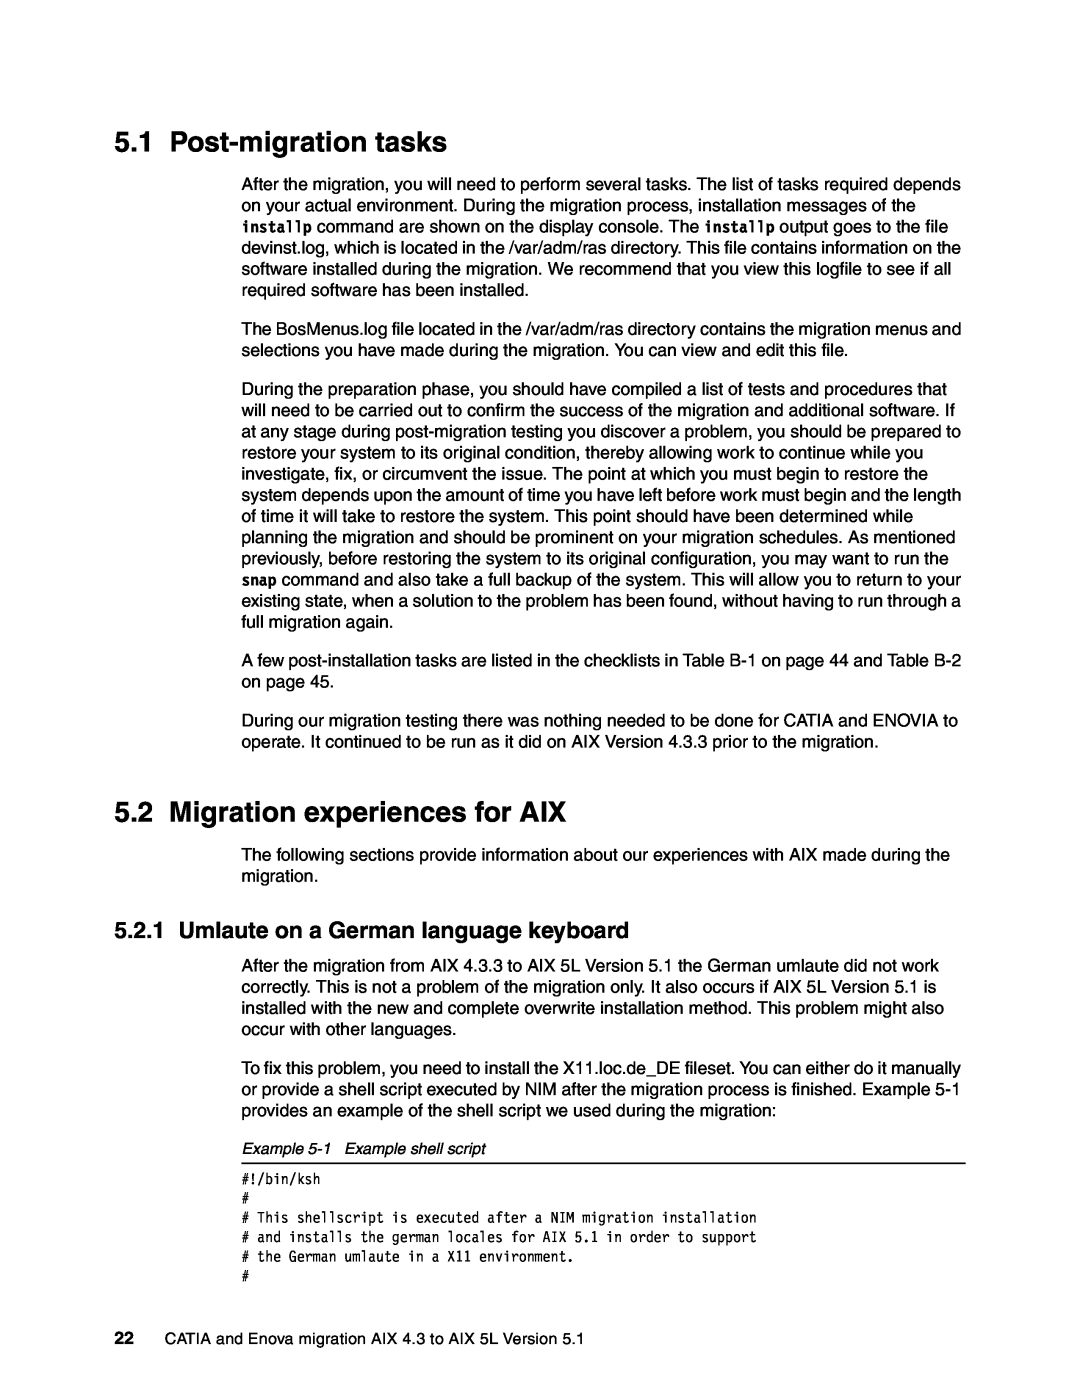 IBM AIX5L, AIX 4.3 manual Post-migrationtasks, Migration experiences for AIX, Umlaute on a German language keyboard 